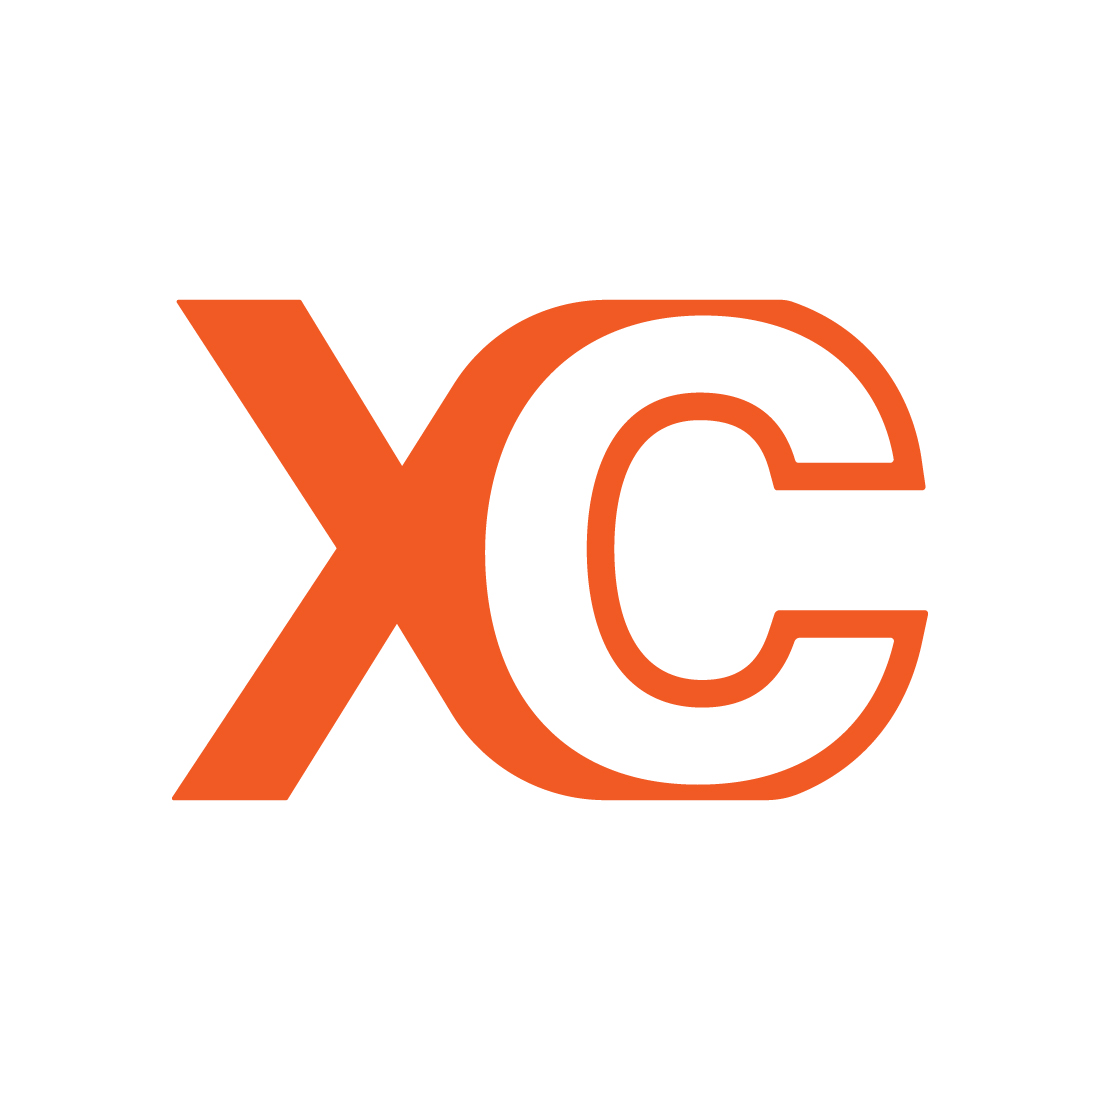 Initials XC logo design vector template arts XC letters logo design CX logo best company identity orange color logo preview image.